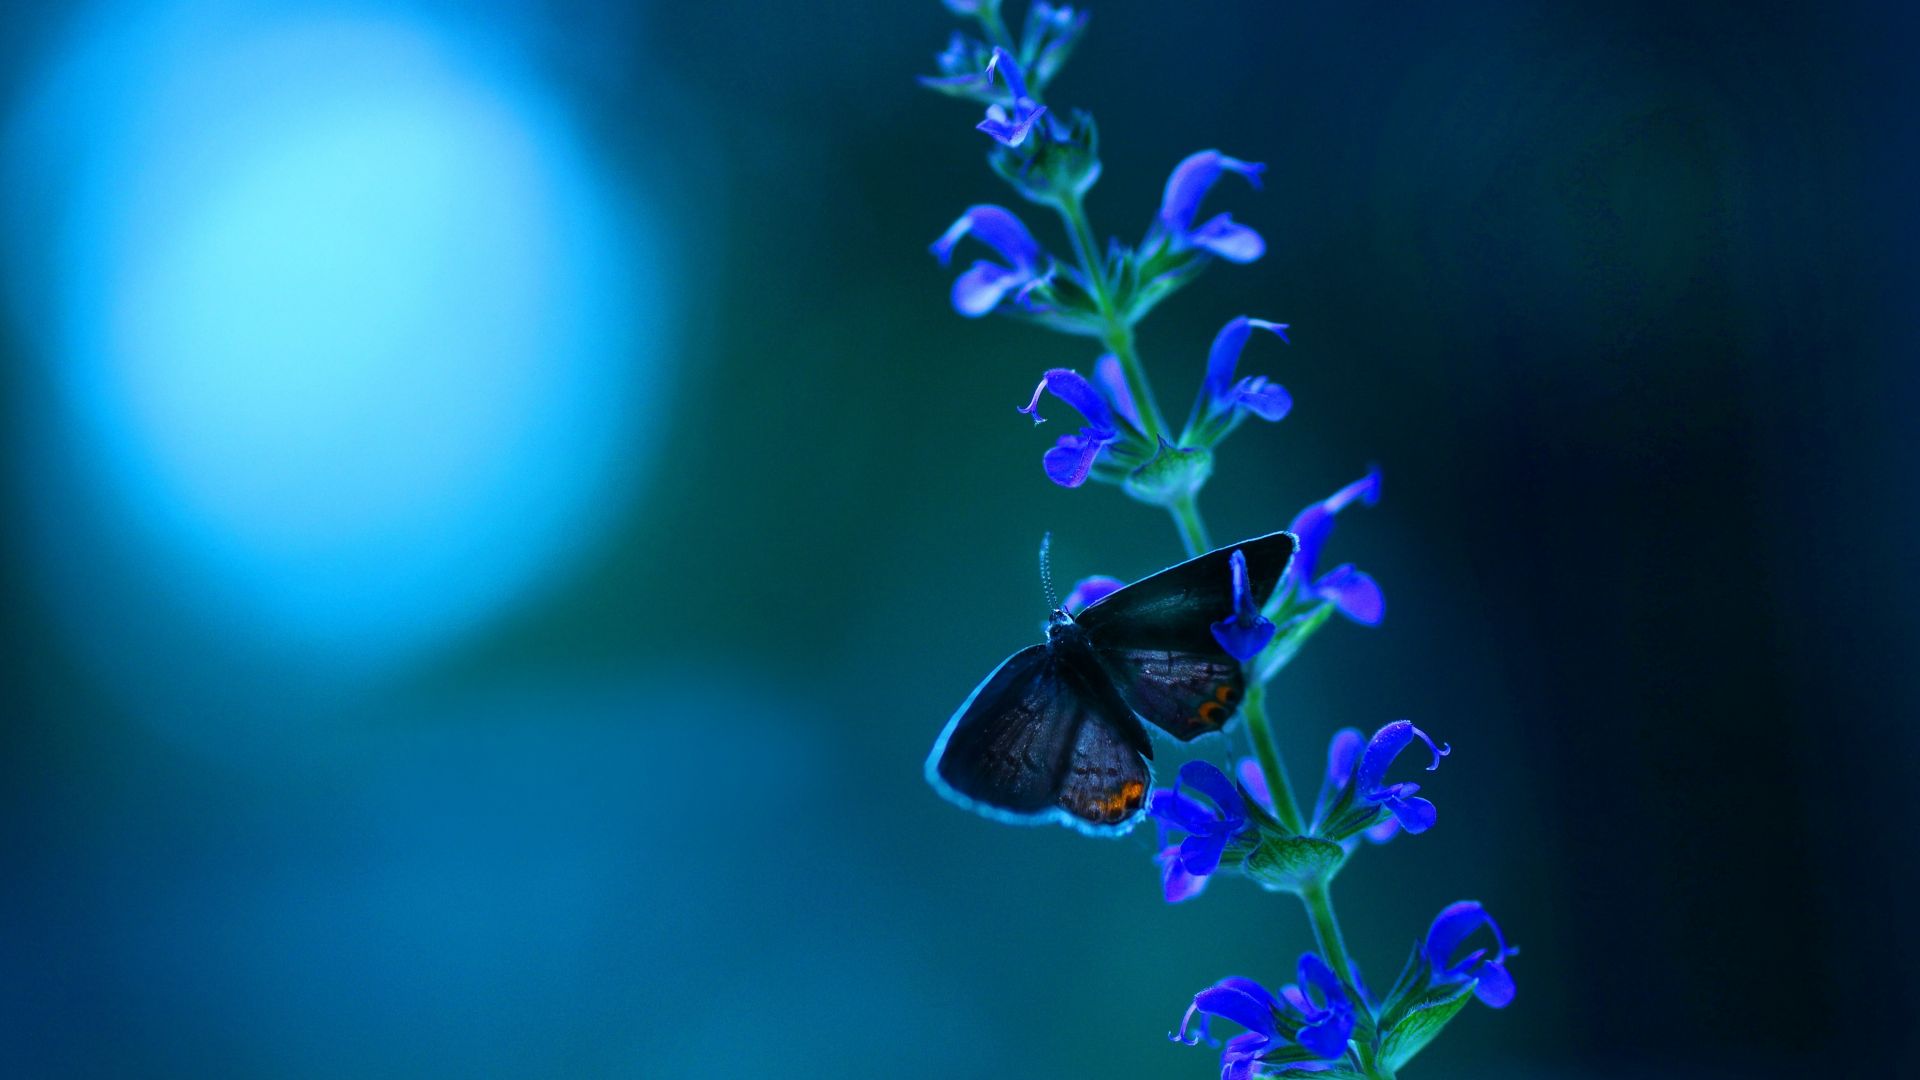 Butterfly, flowers, blue (horizontal)